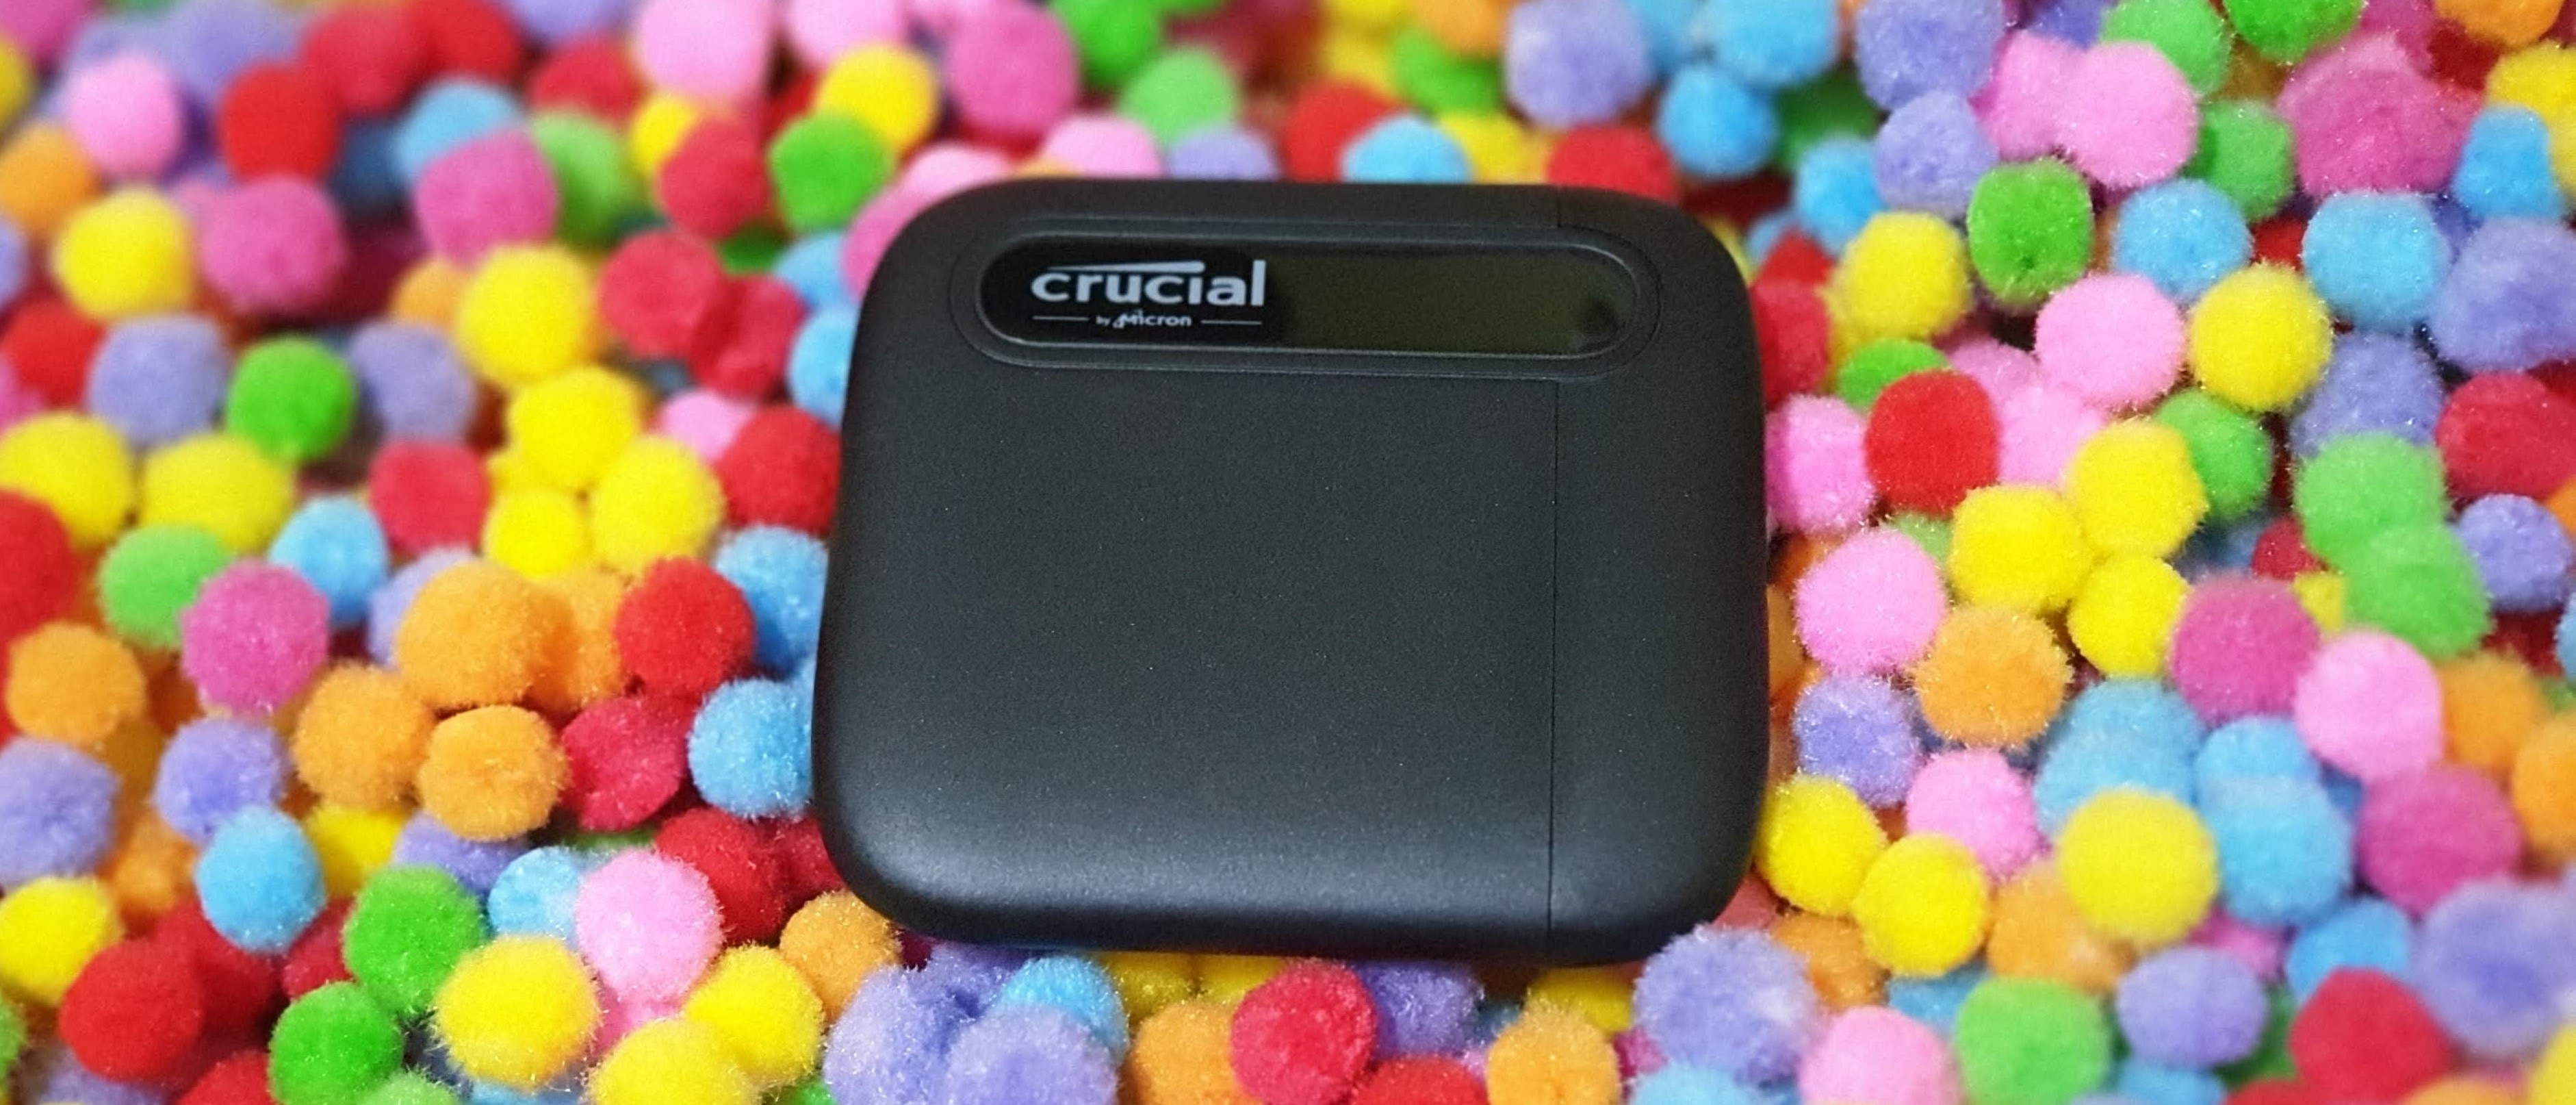 Crucial X6 2TB Portable SSD, CT2000X6SSD9